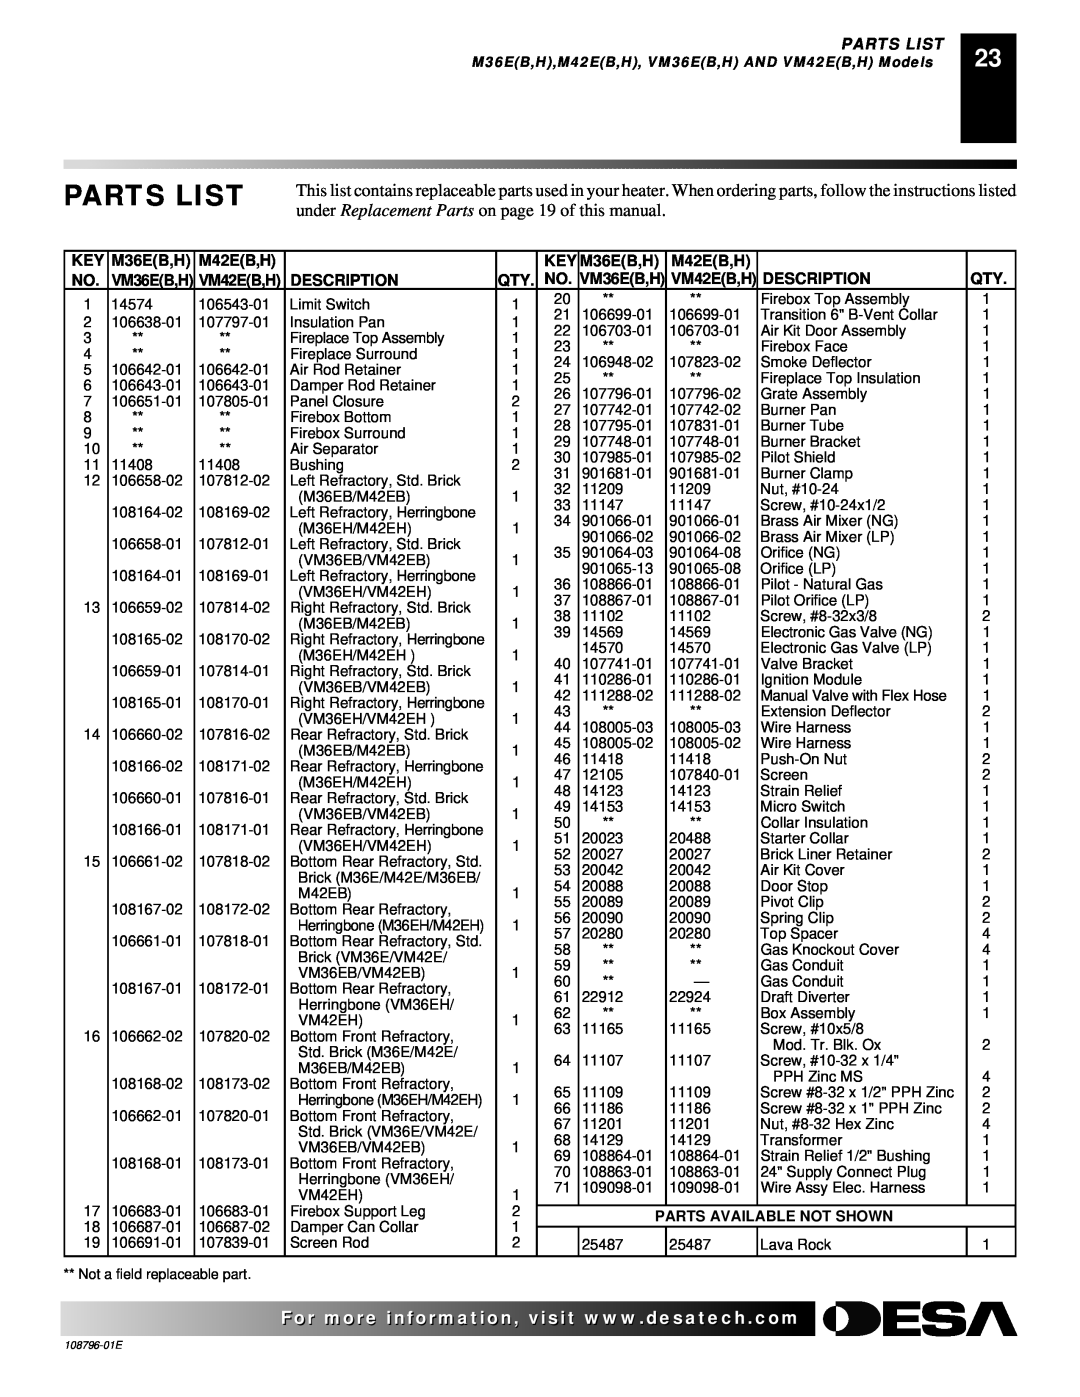 Desa VM36E(B, VM42E(B installation manual Parts List, M36EB,H, M42EB,H, Description 